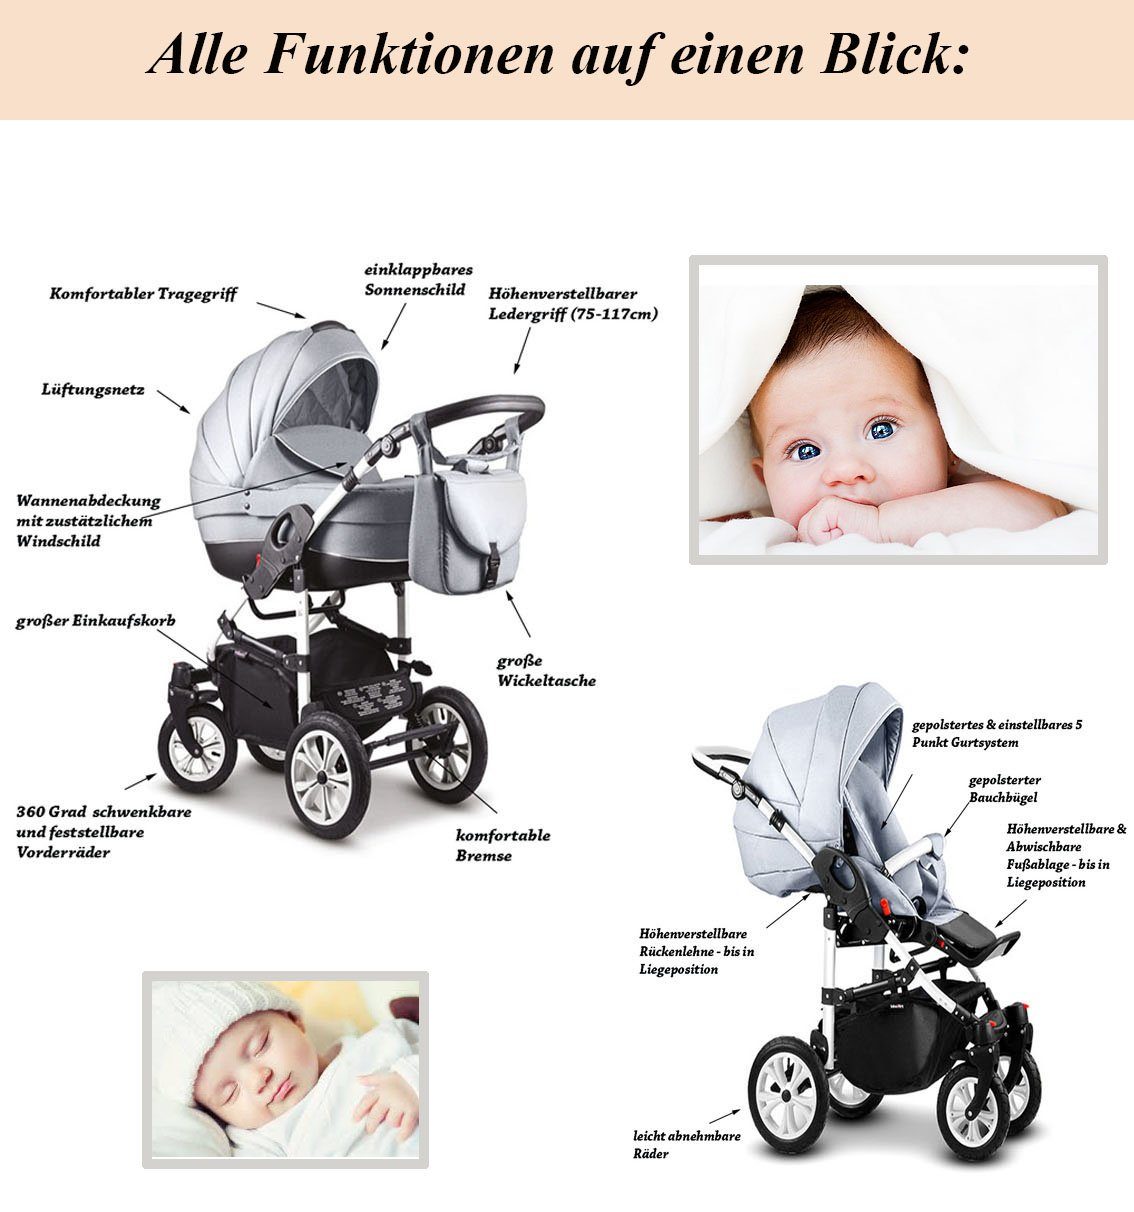 2 babies-on-wheels 16 13 in - Farben in Teile Kinderwagen-Set Kombi-Kinderwagen - Cosmo 1 Türkis-Weiß